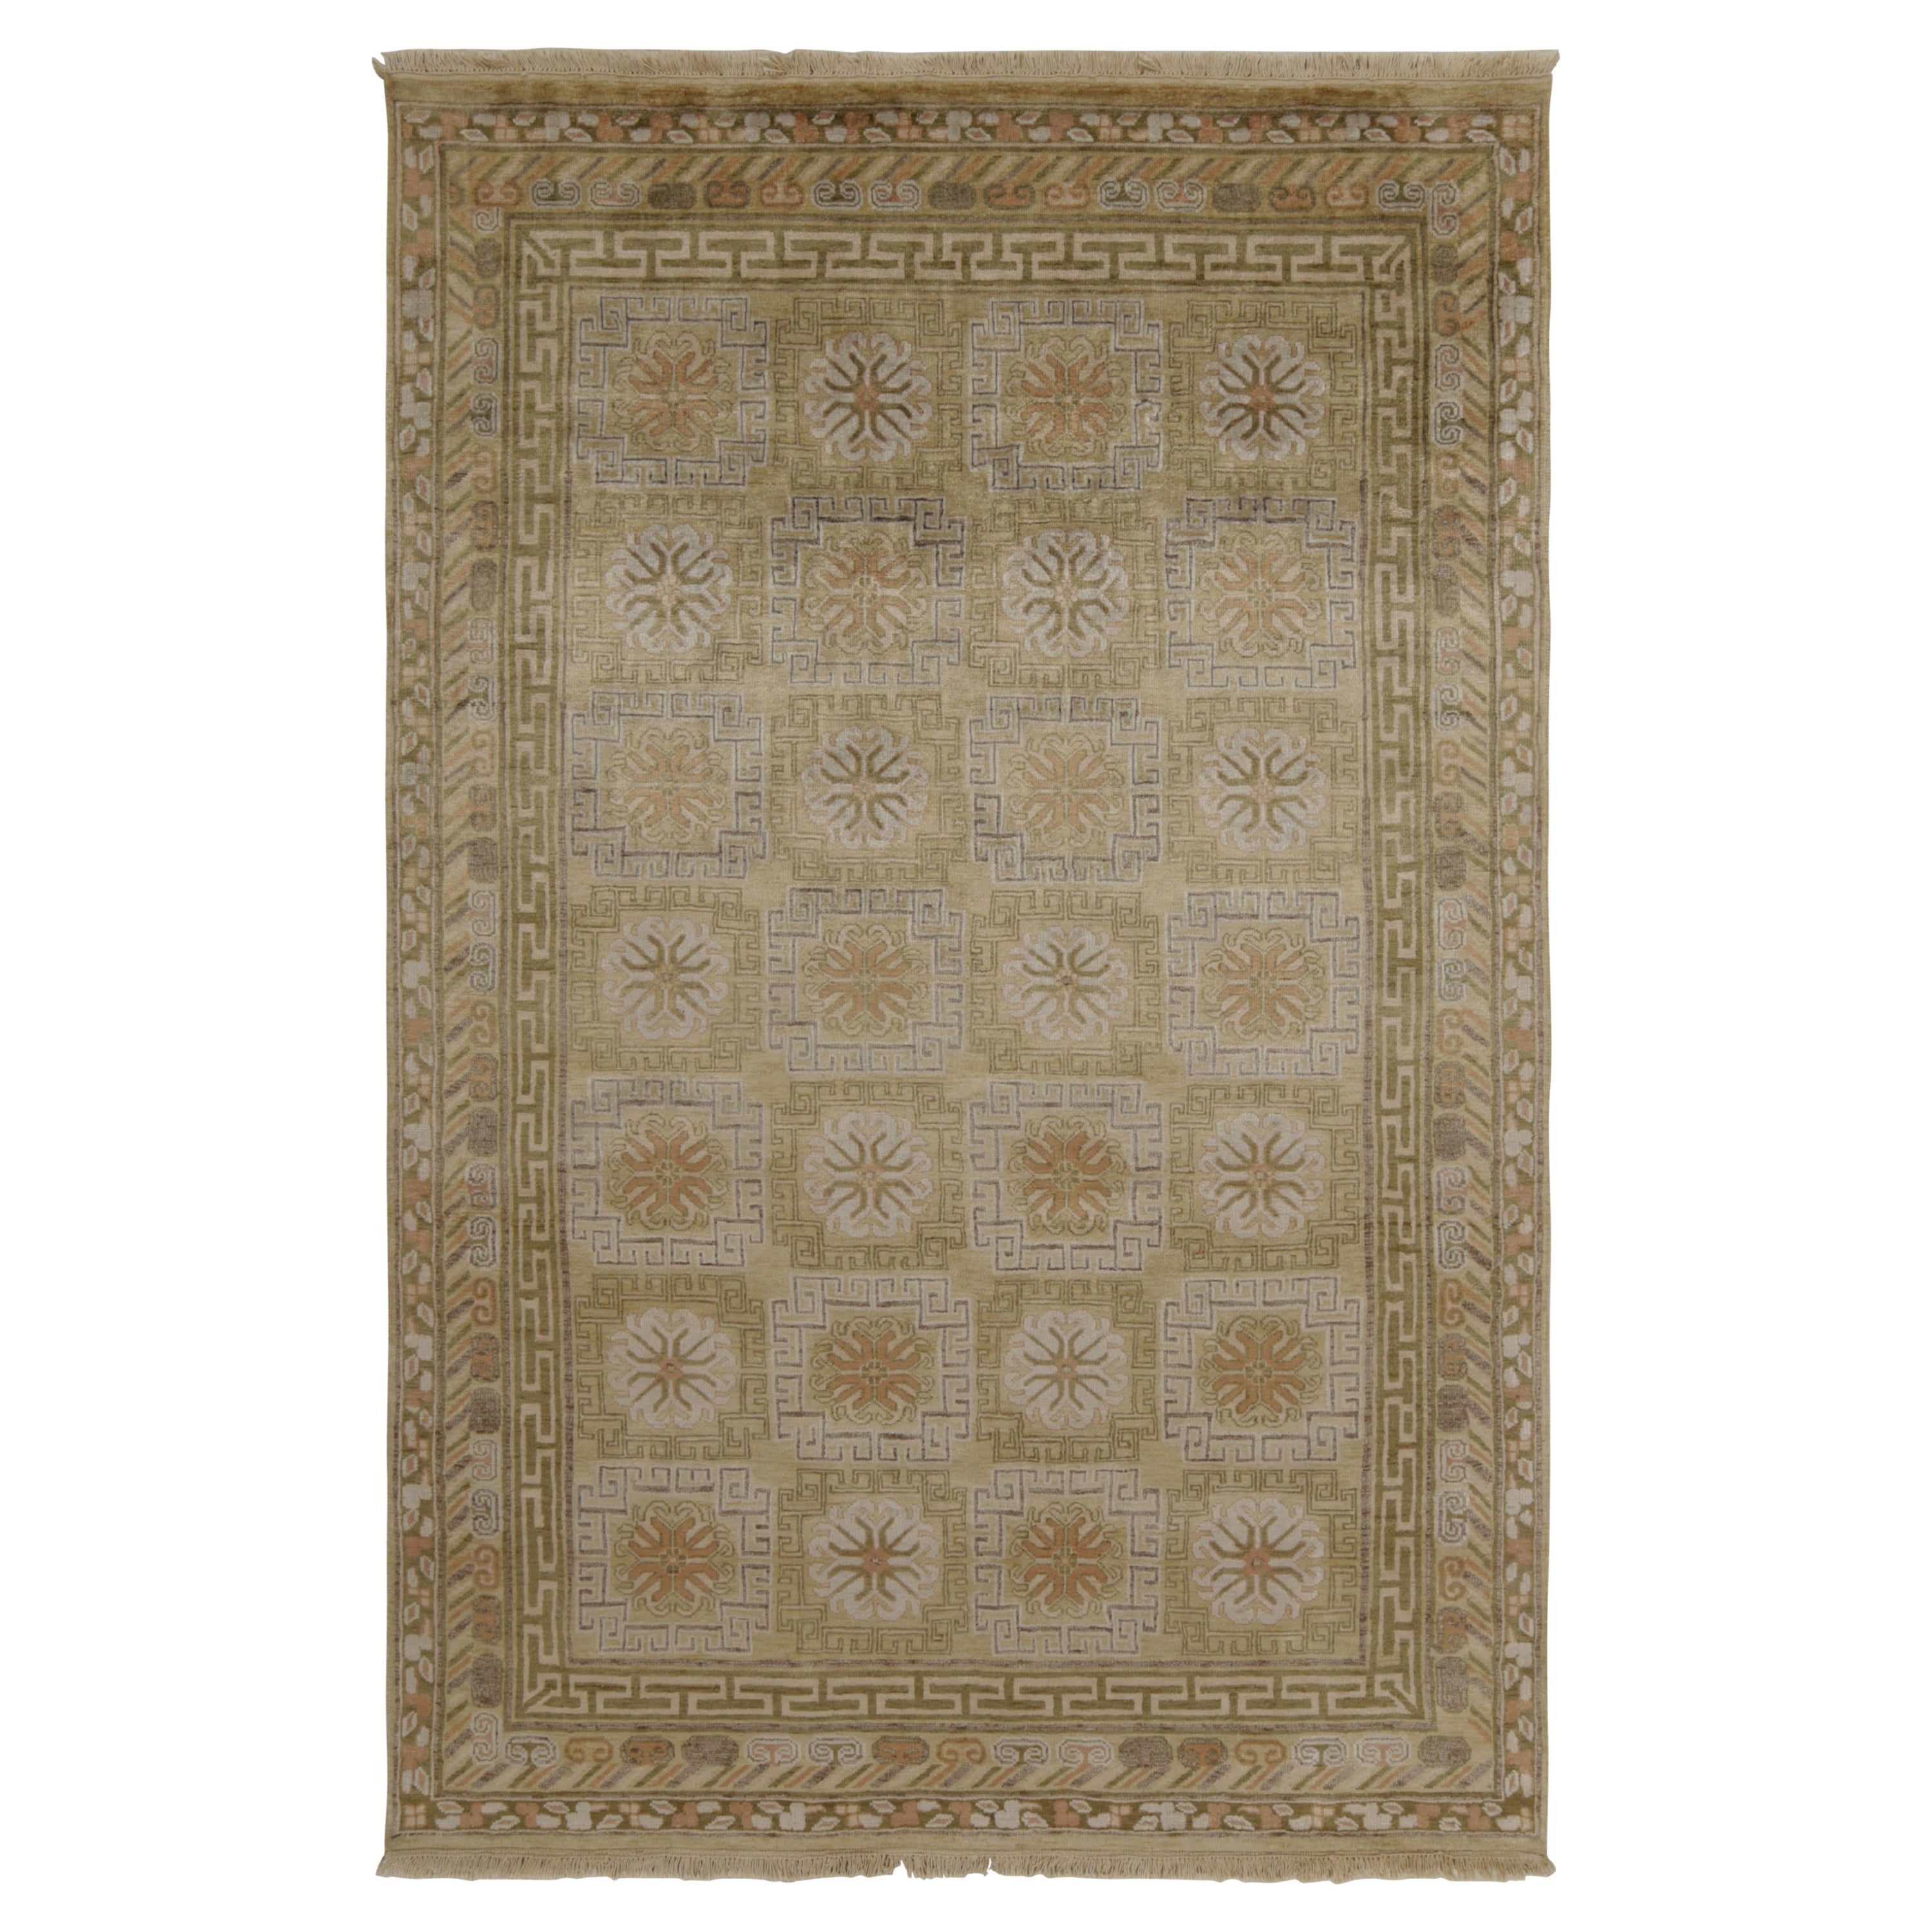 Rug & Kilim’s Khotan style rug in Gold and Beige-Brown Geometric Patterns